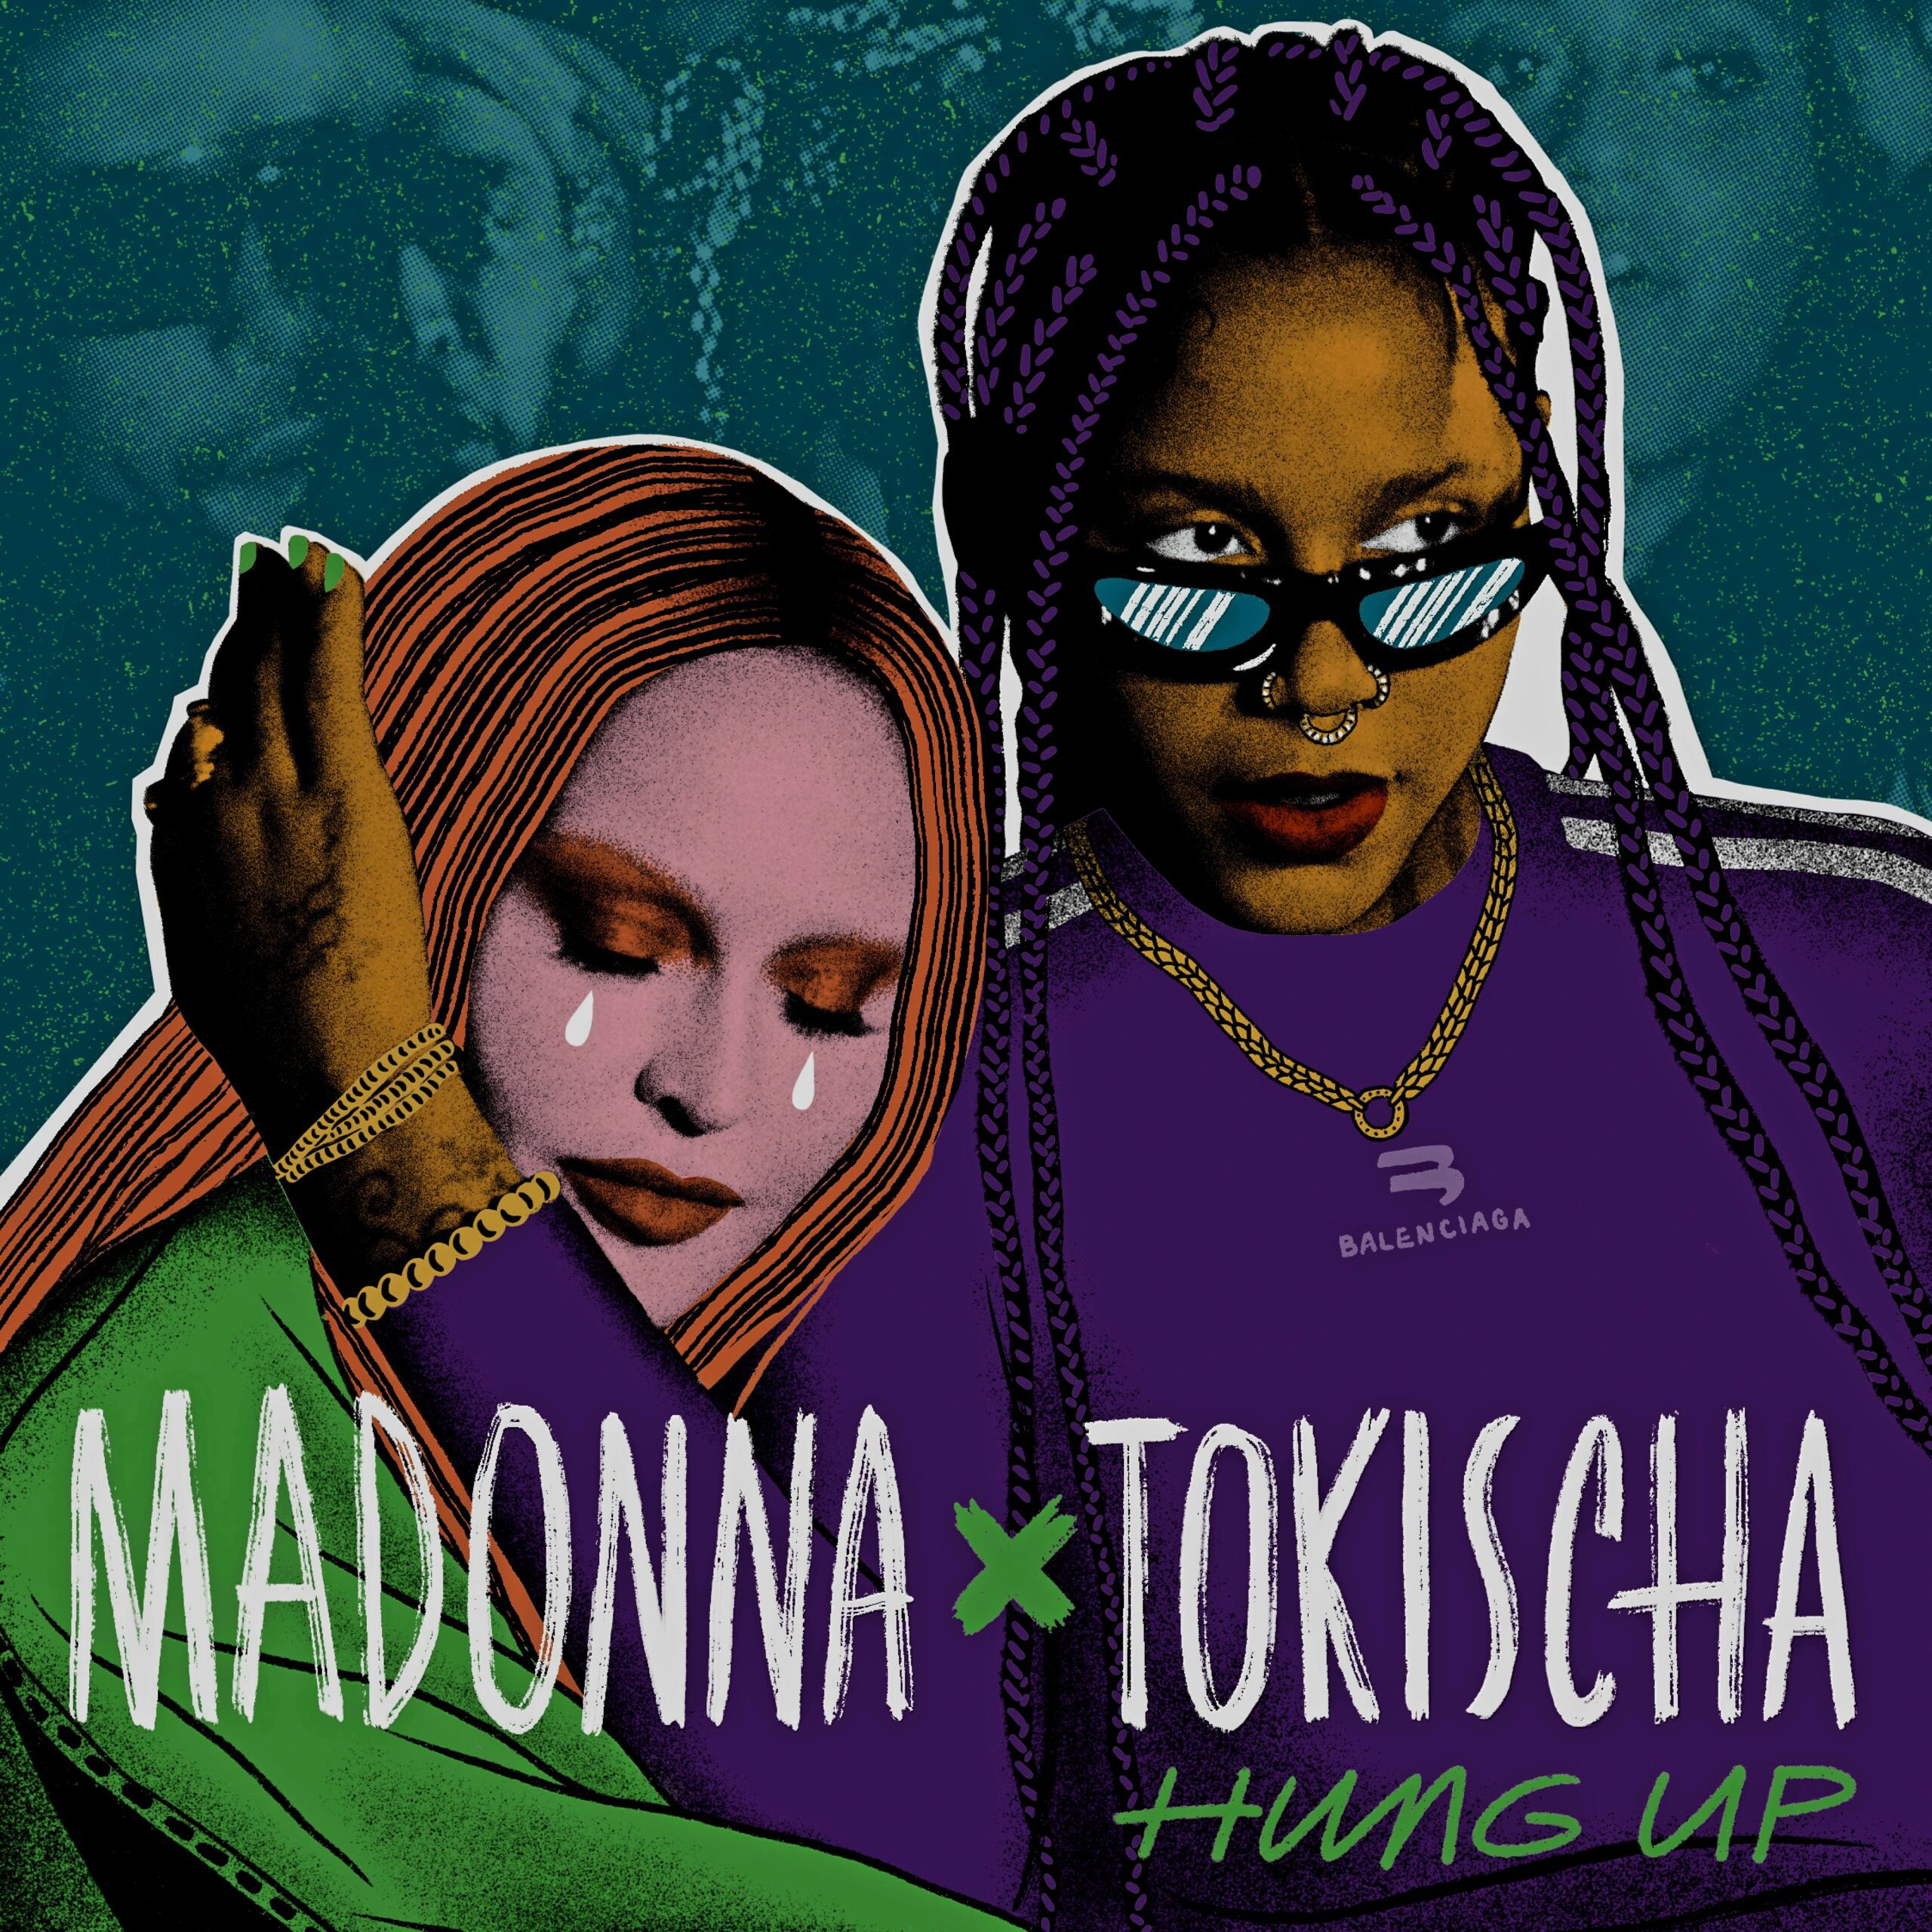 Madonna × Tokisha release new song Hung Up via 360 MAGAZINE